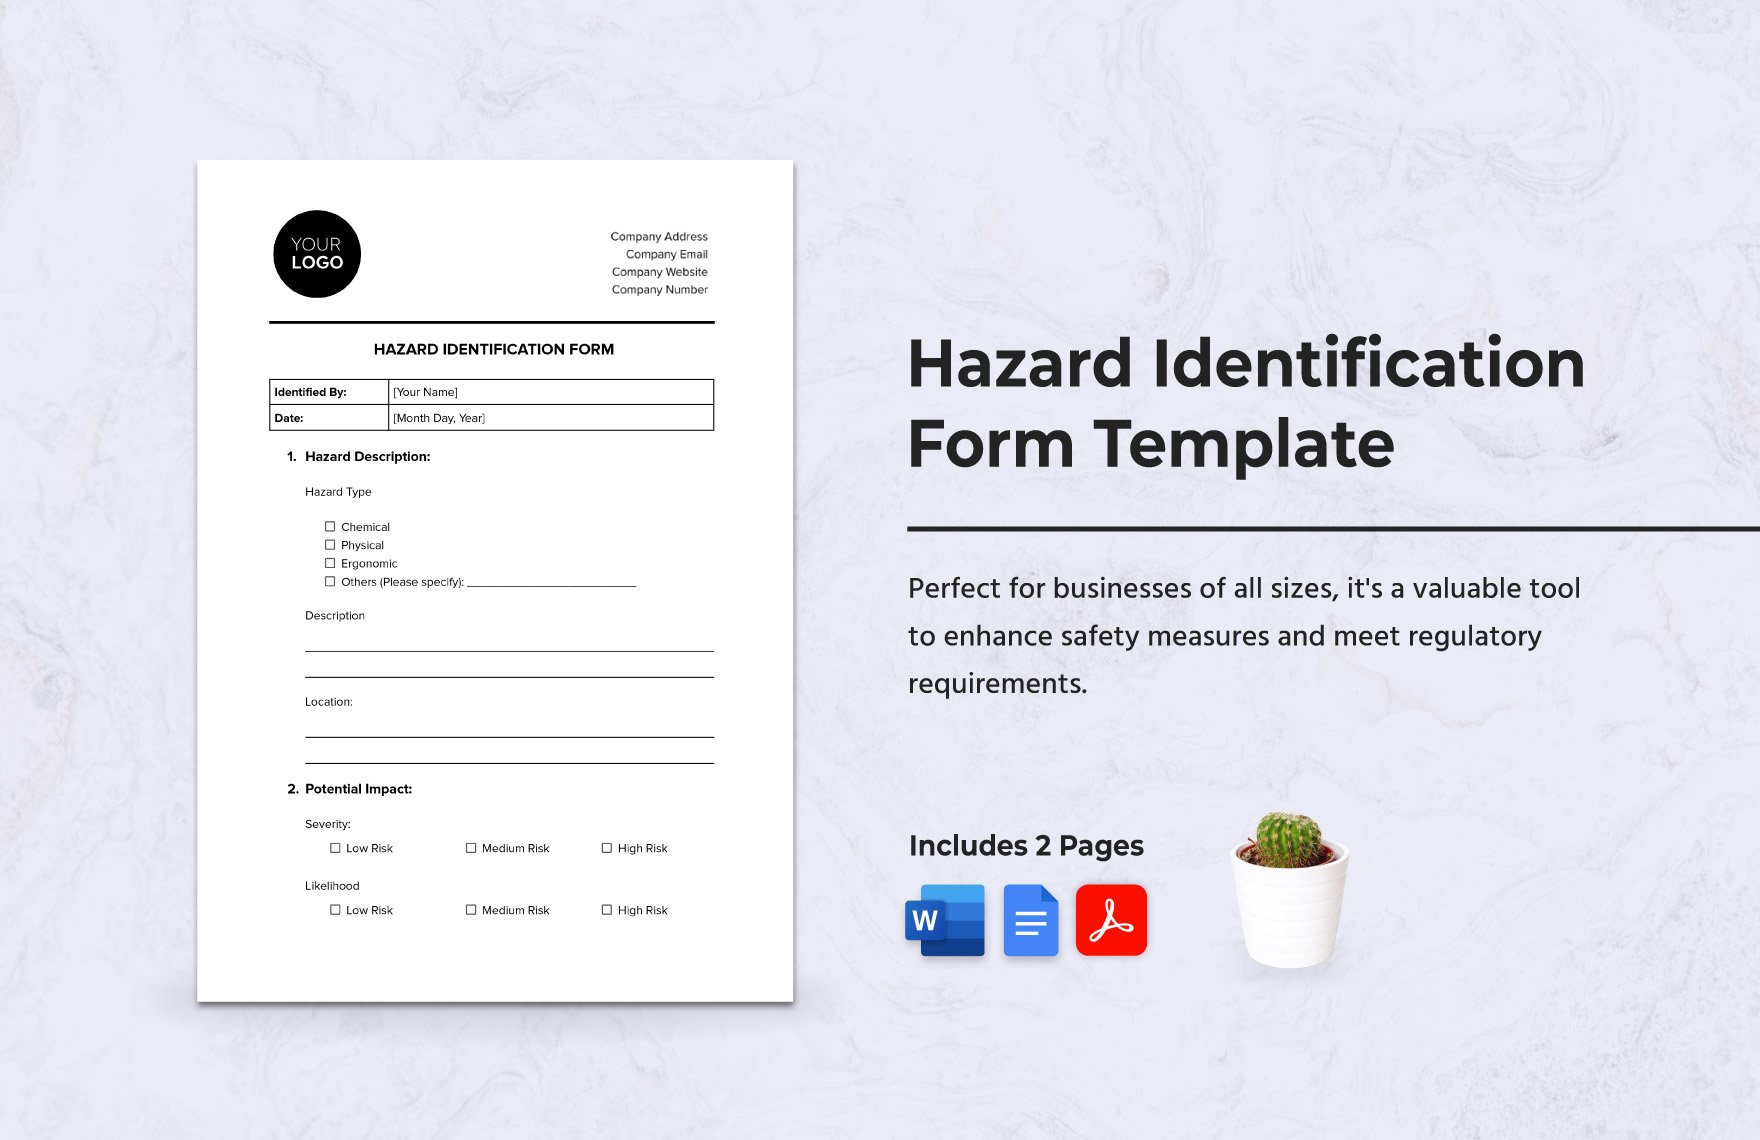 Hazard Identification Form Template in Word, Google Docs, PDF